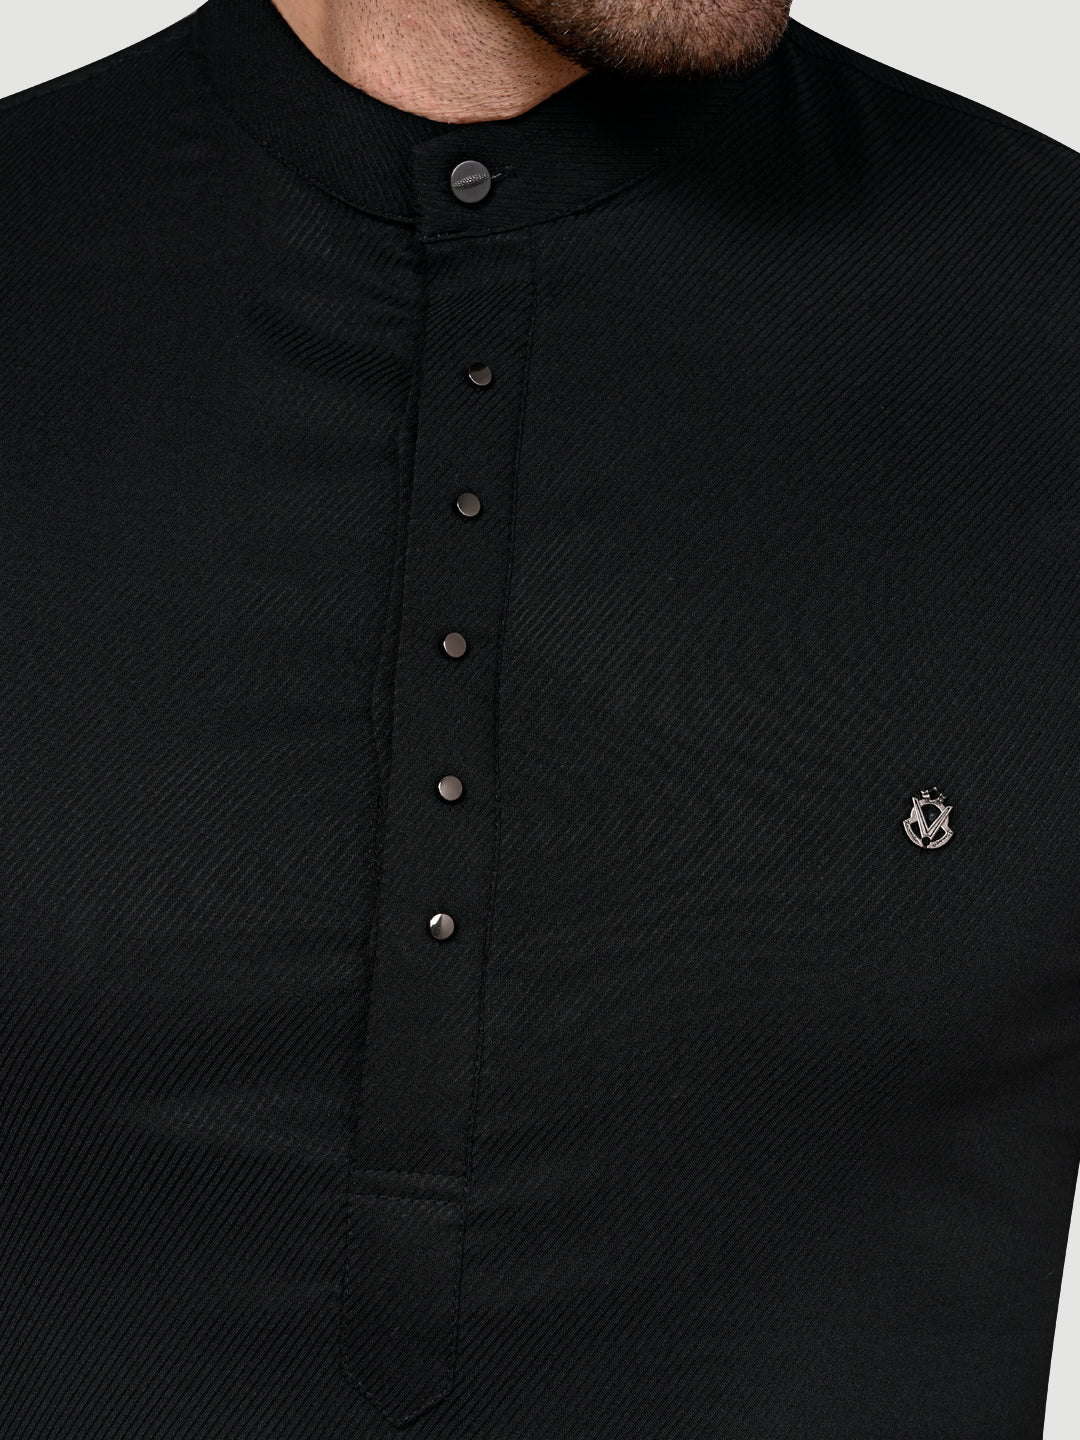 Black and White Men's Designer Short Kurta with Metal Buttons NIght Black